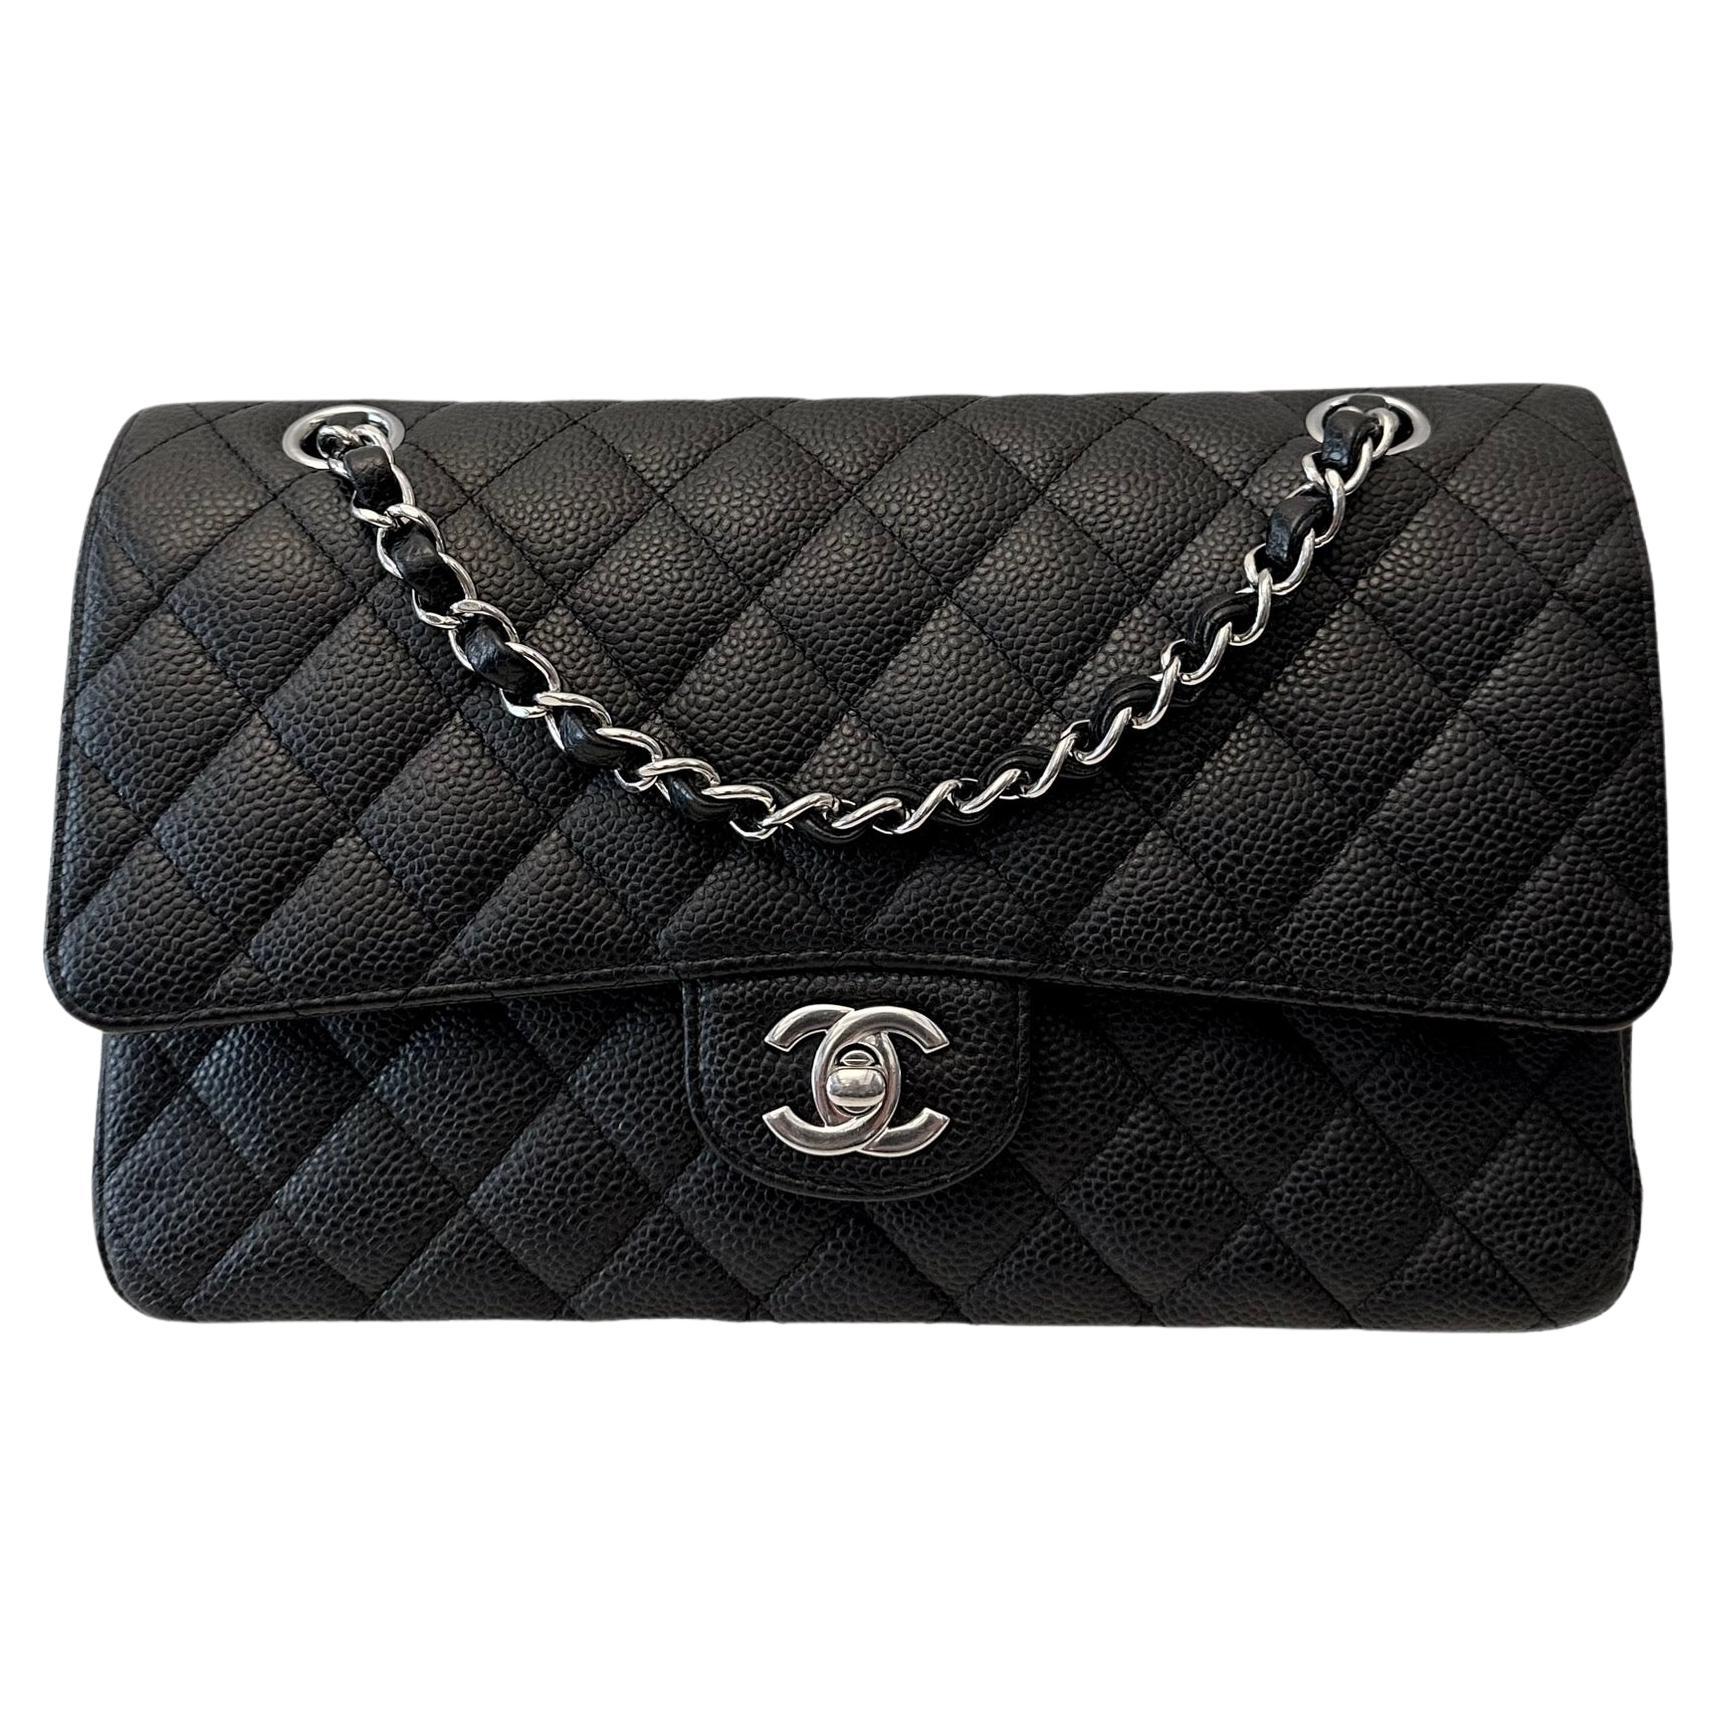 Chanel Black Caviar Leather Double Flap Medium Timeless Classic Bag